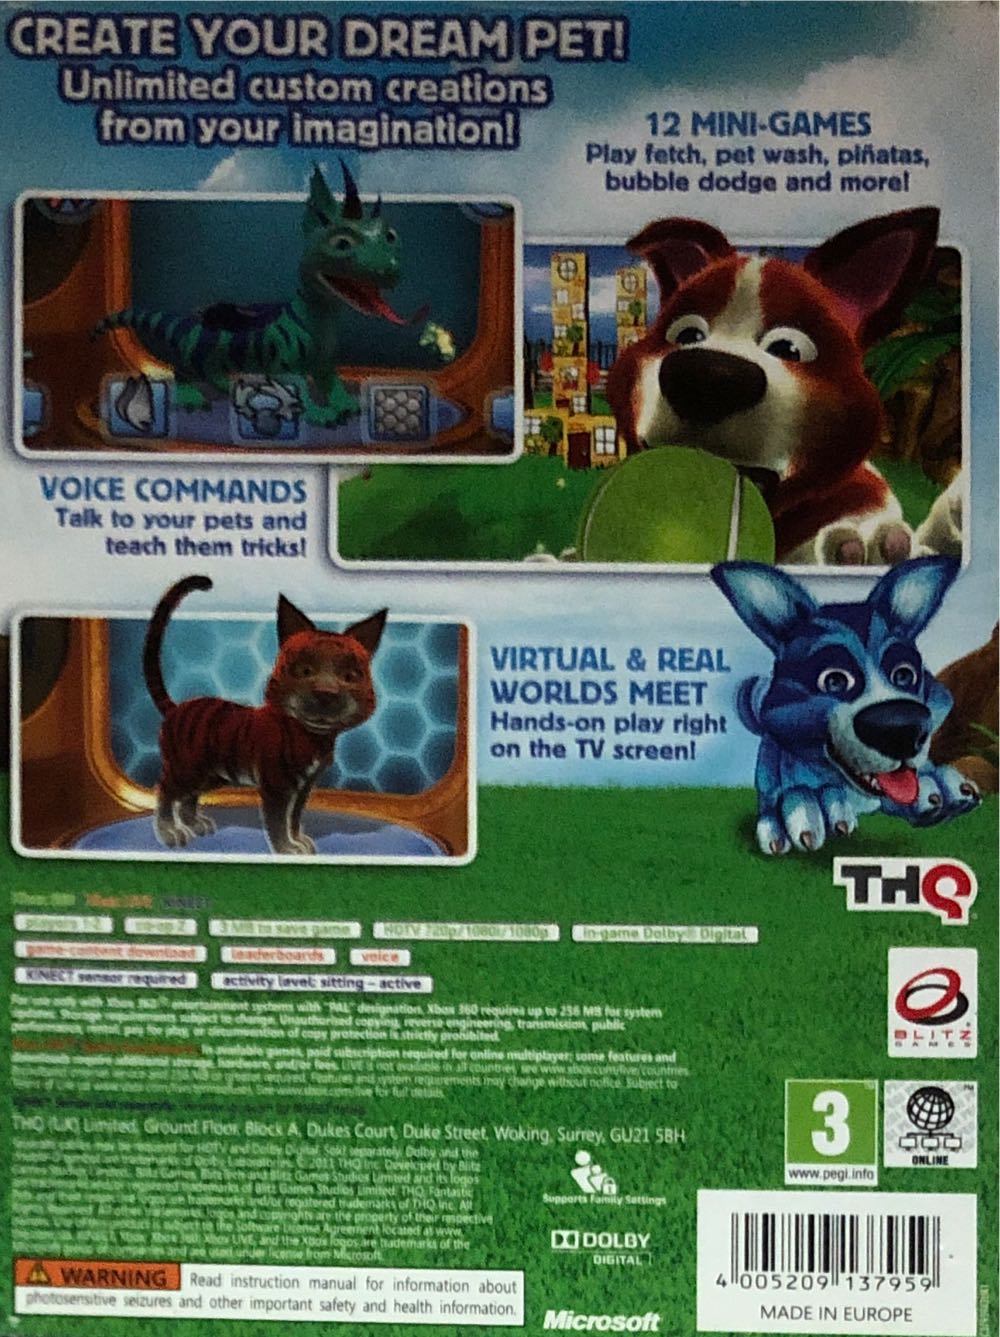 Fantastic Pets - Microsoft Xbox 360 video game collectible [Barcode 4005209137959] - Main Image 2